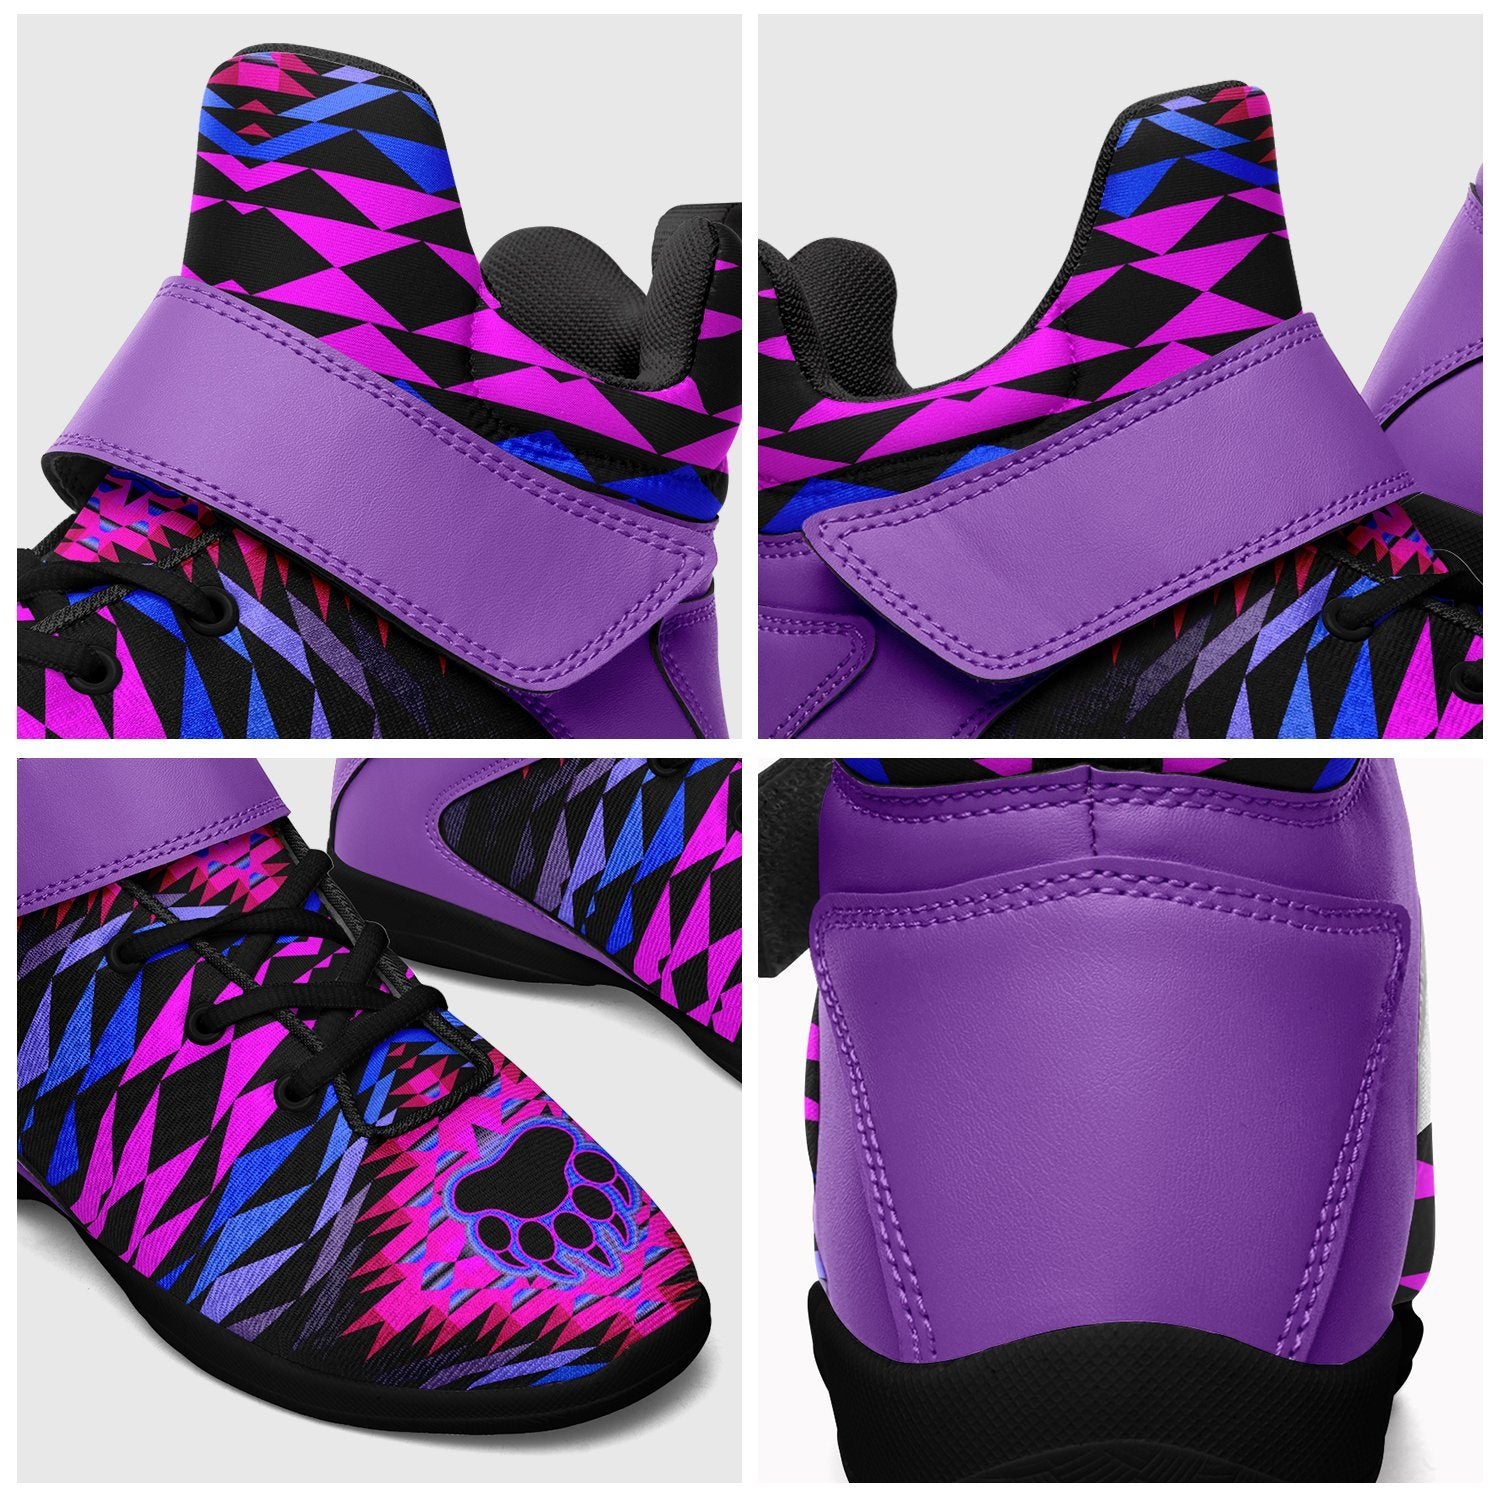 Sunset Bearpaw Blanket Pink Ipottaa Basketball / Sport High Top Shoes 49 Dzine 